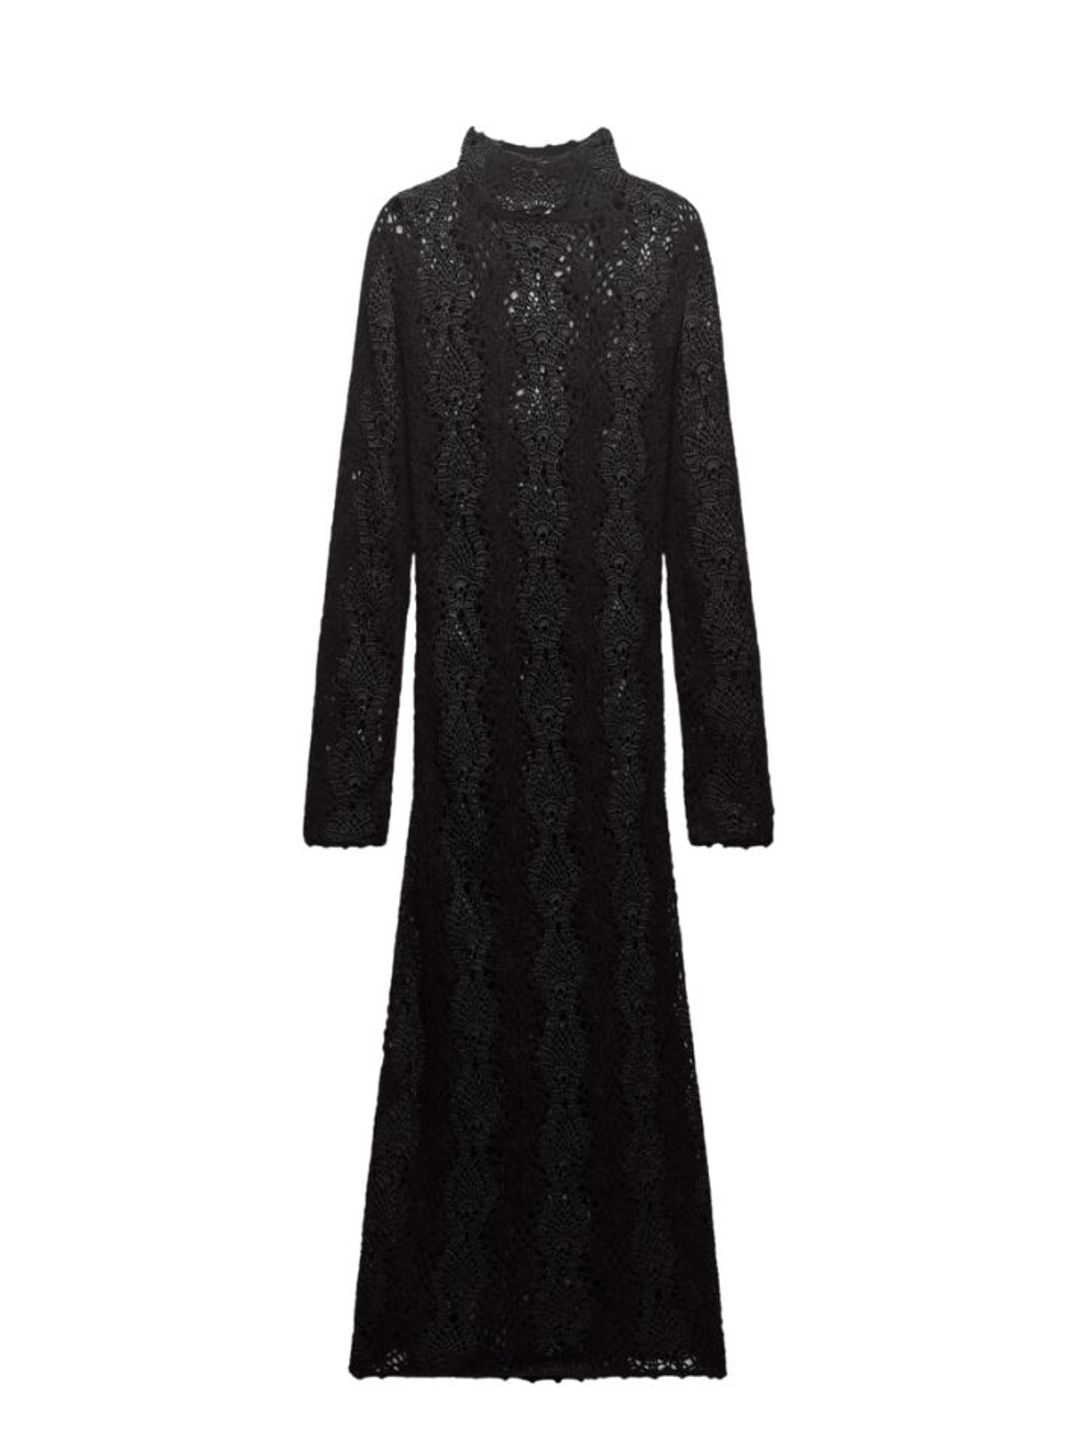 Zara high-necked lace dress